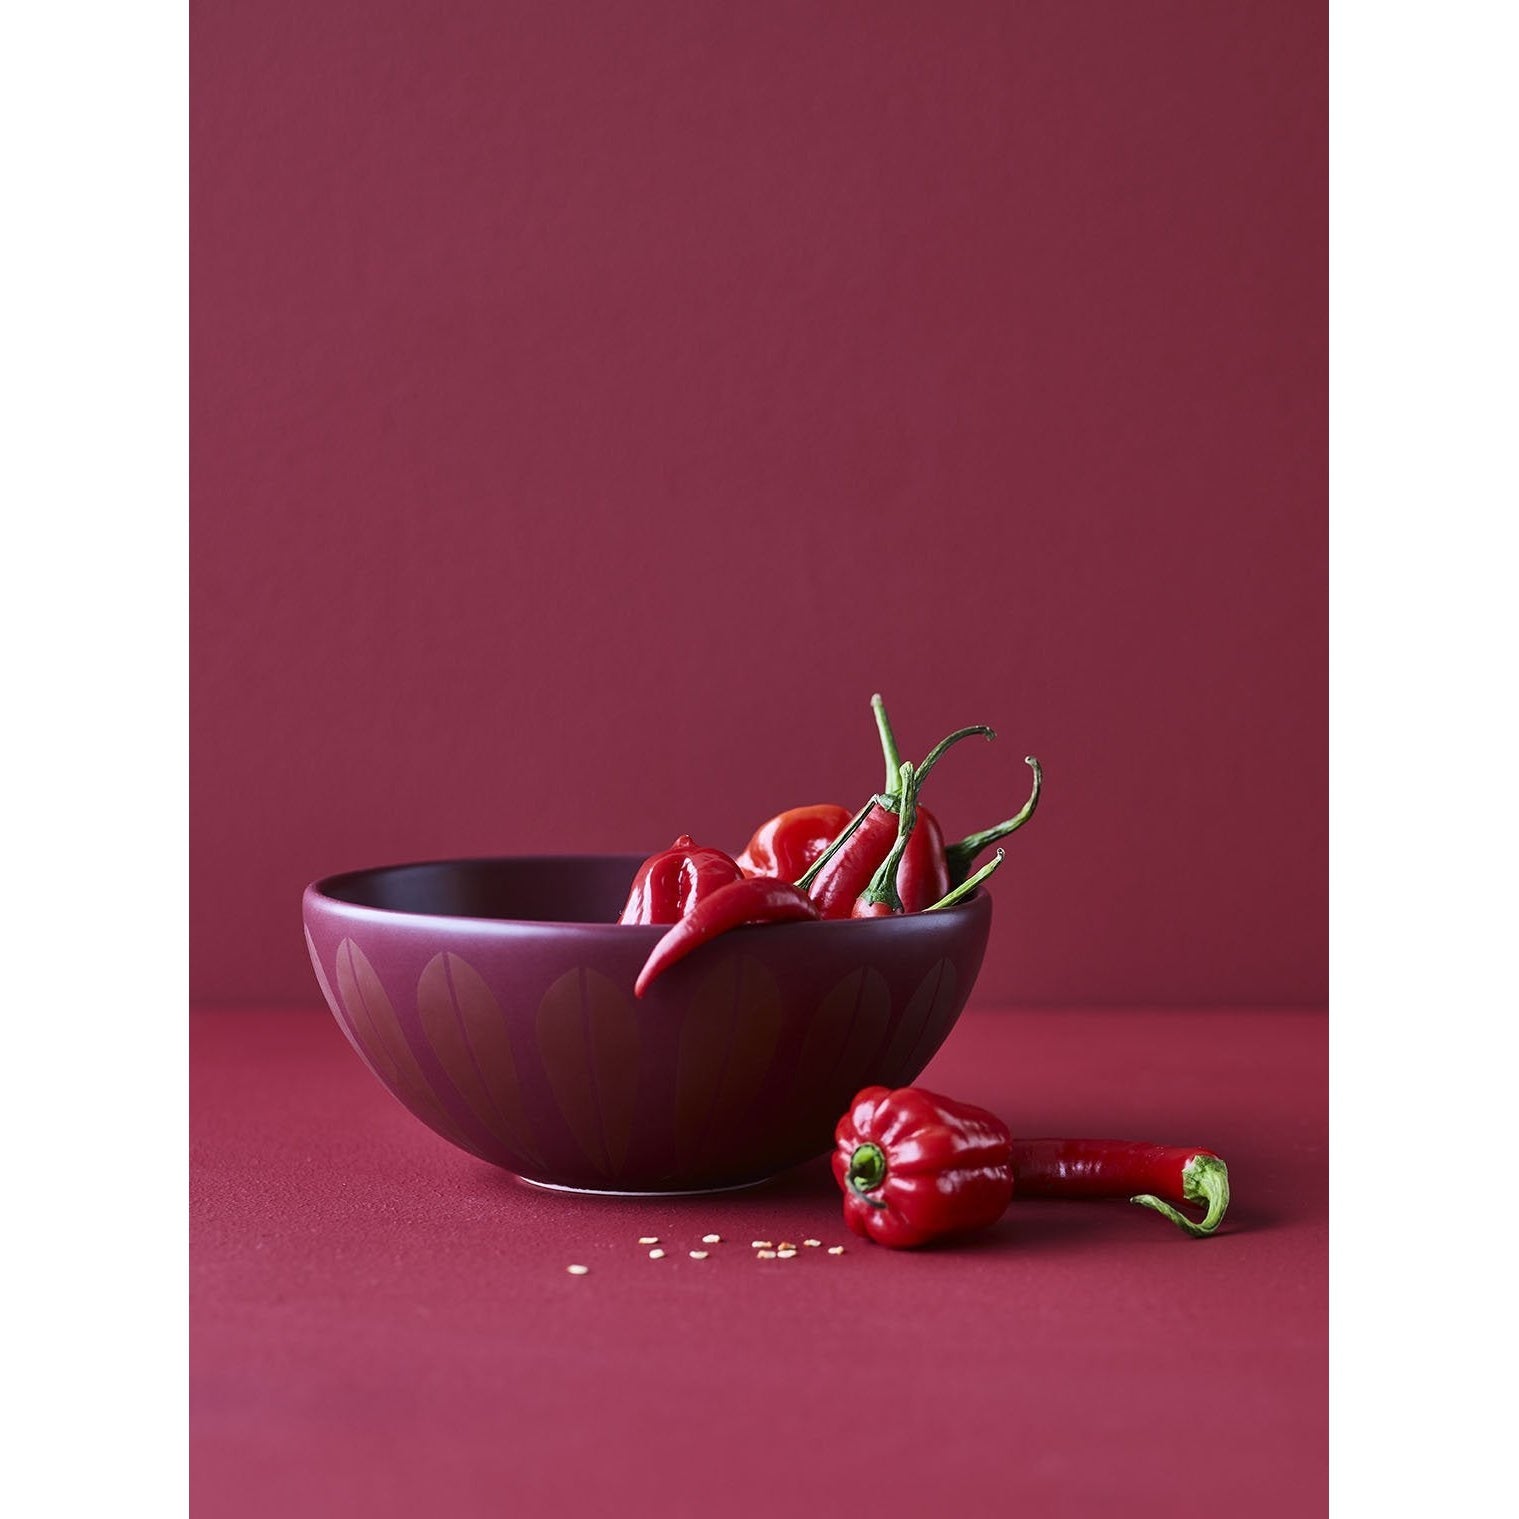 Lucie Kaas Arne Clausen Bowl rojo oscuro, 24 cm